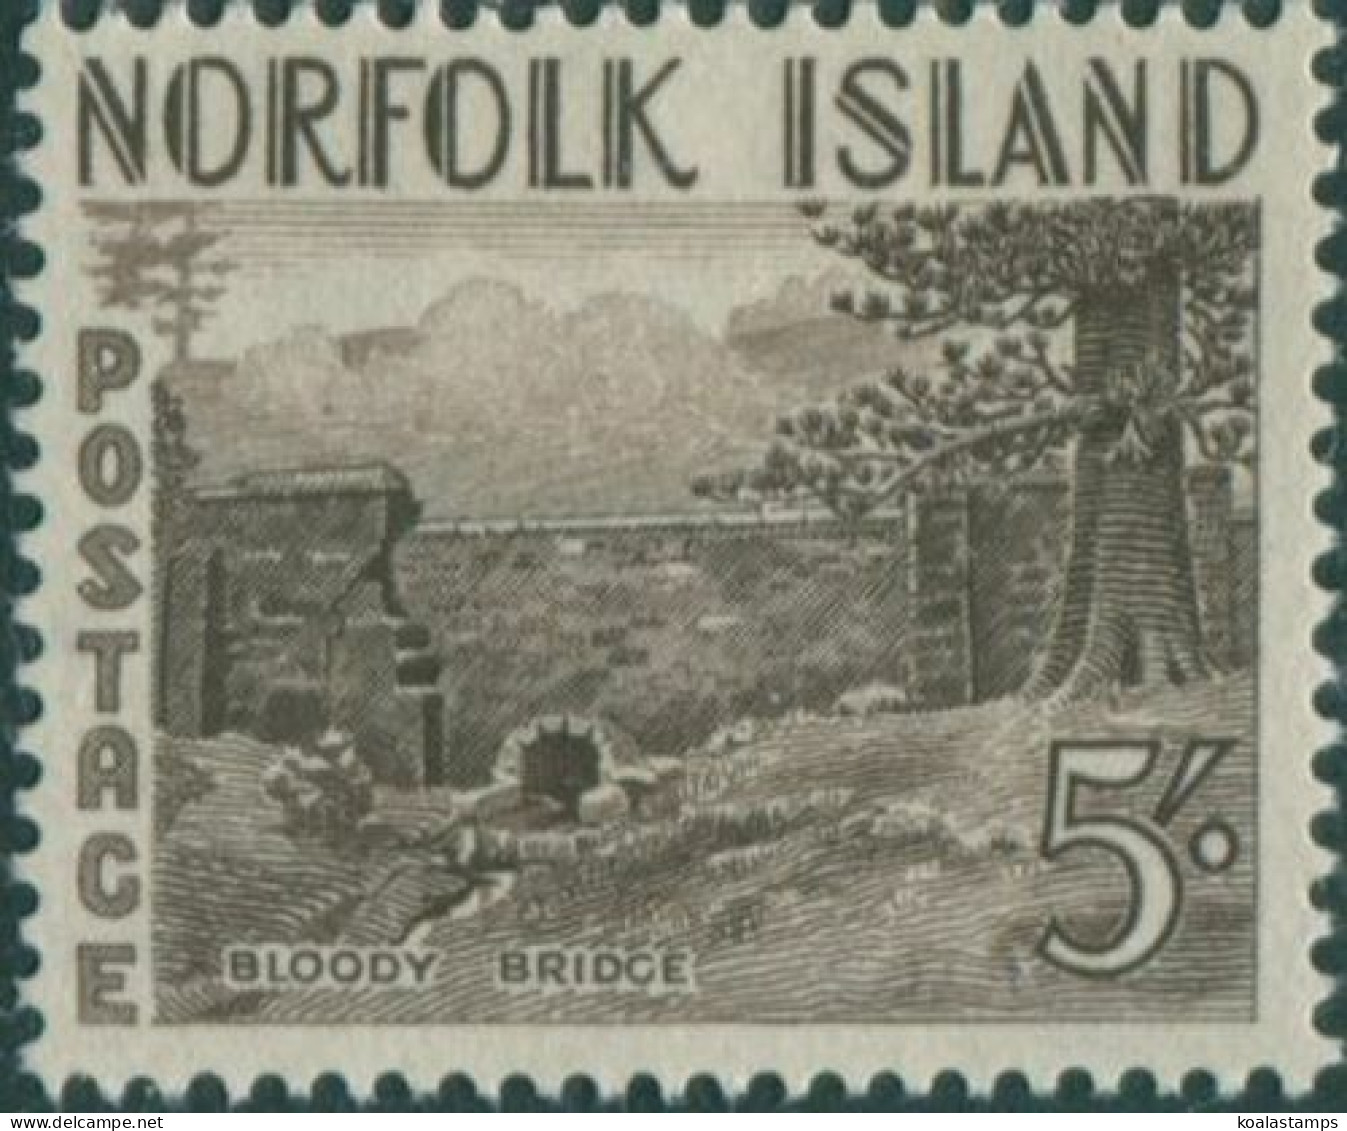 Norfolk Island 1953 SG18 5/- Brown Bloody Bridge MNH - Ile Norfolk